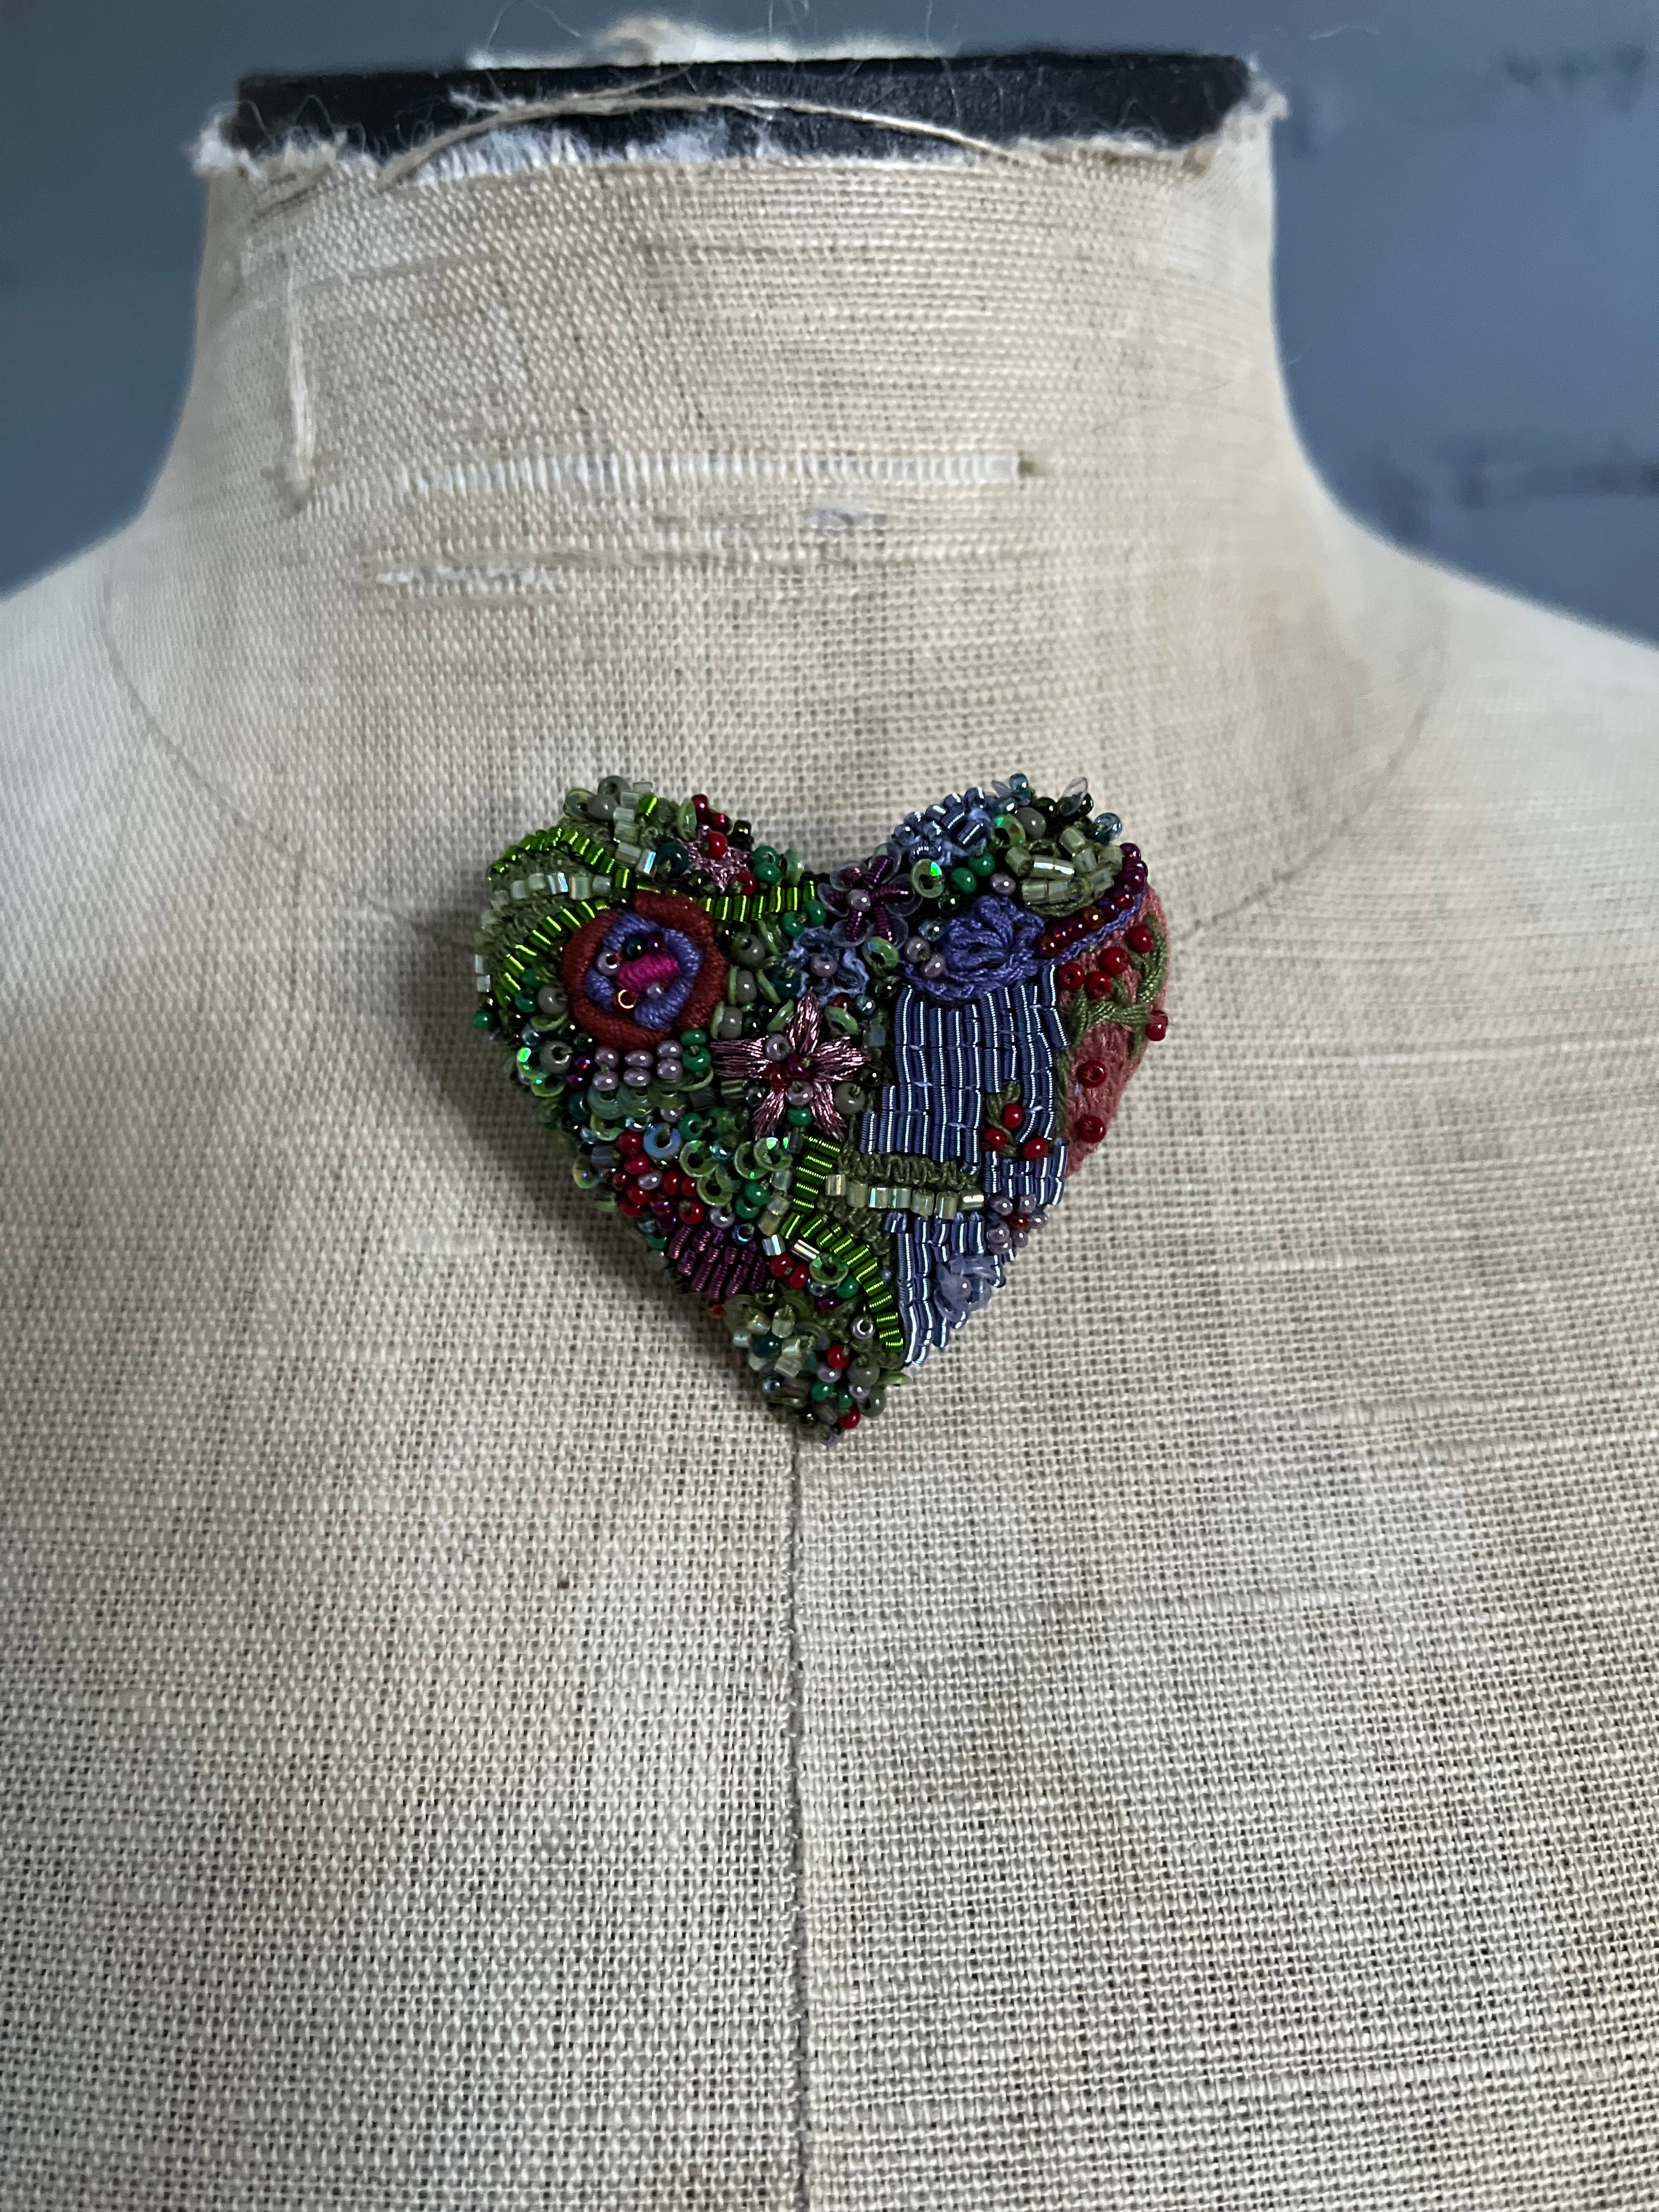 Handmade Brooch Pin - Blooming Heart